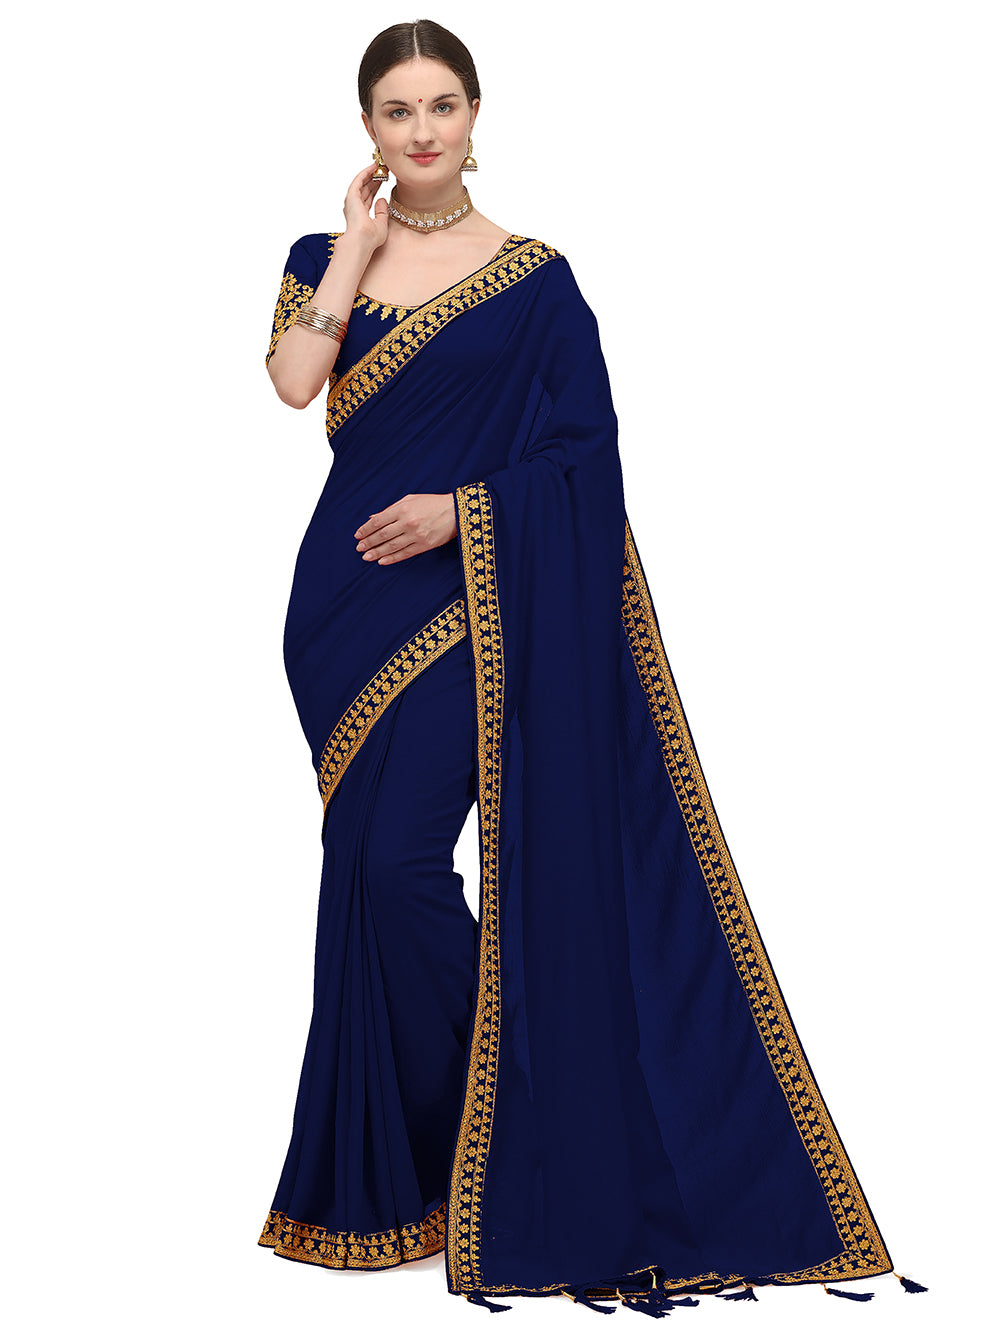 Women's Ahir Embroidery Work Border Wedding Wear Dupion Silk Saree With Blouse Piece (Nevy Blue) - NIMIDHYA